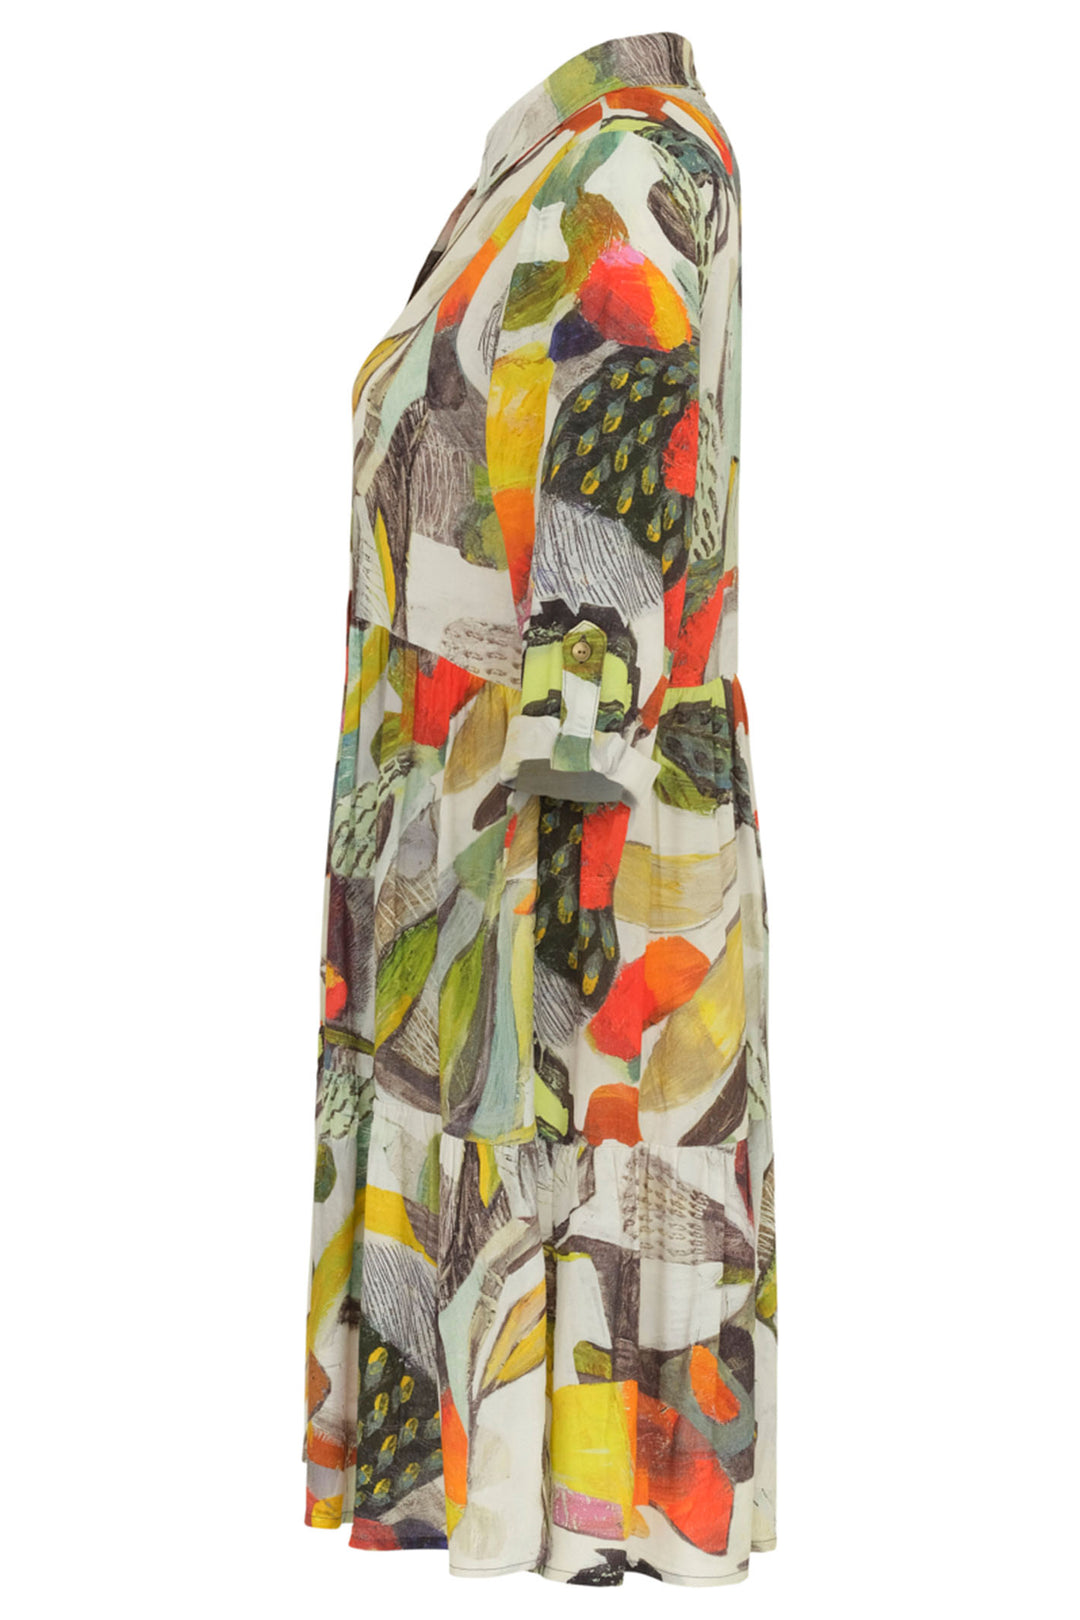 Dolcezza 24701 Simply Art Ests Macleod Botanica Multi Coloured Dress - Shirley Allum Boutique